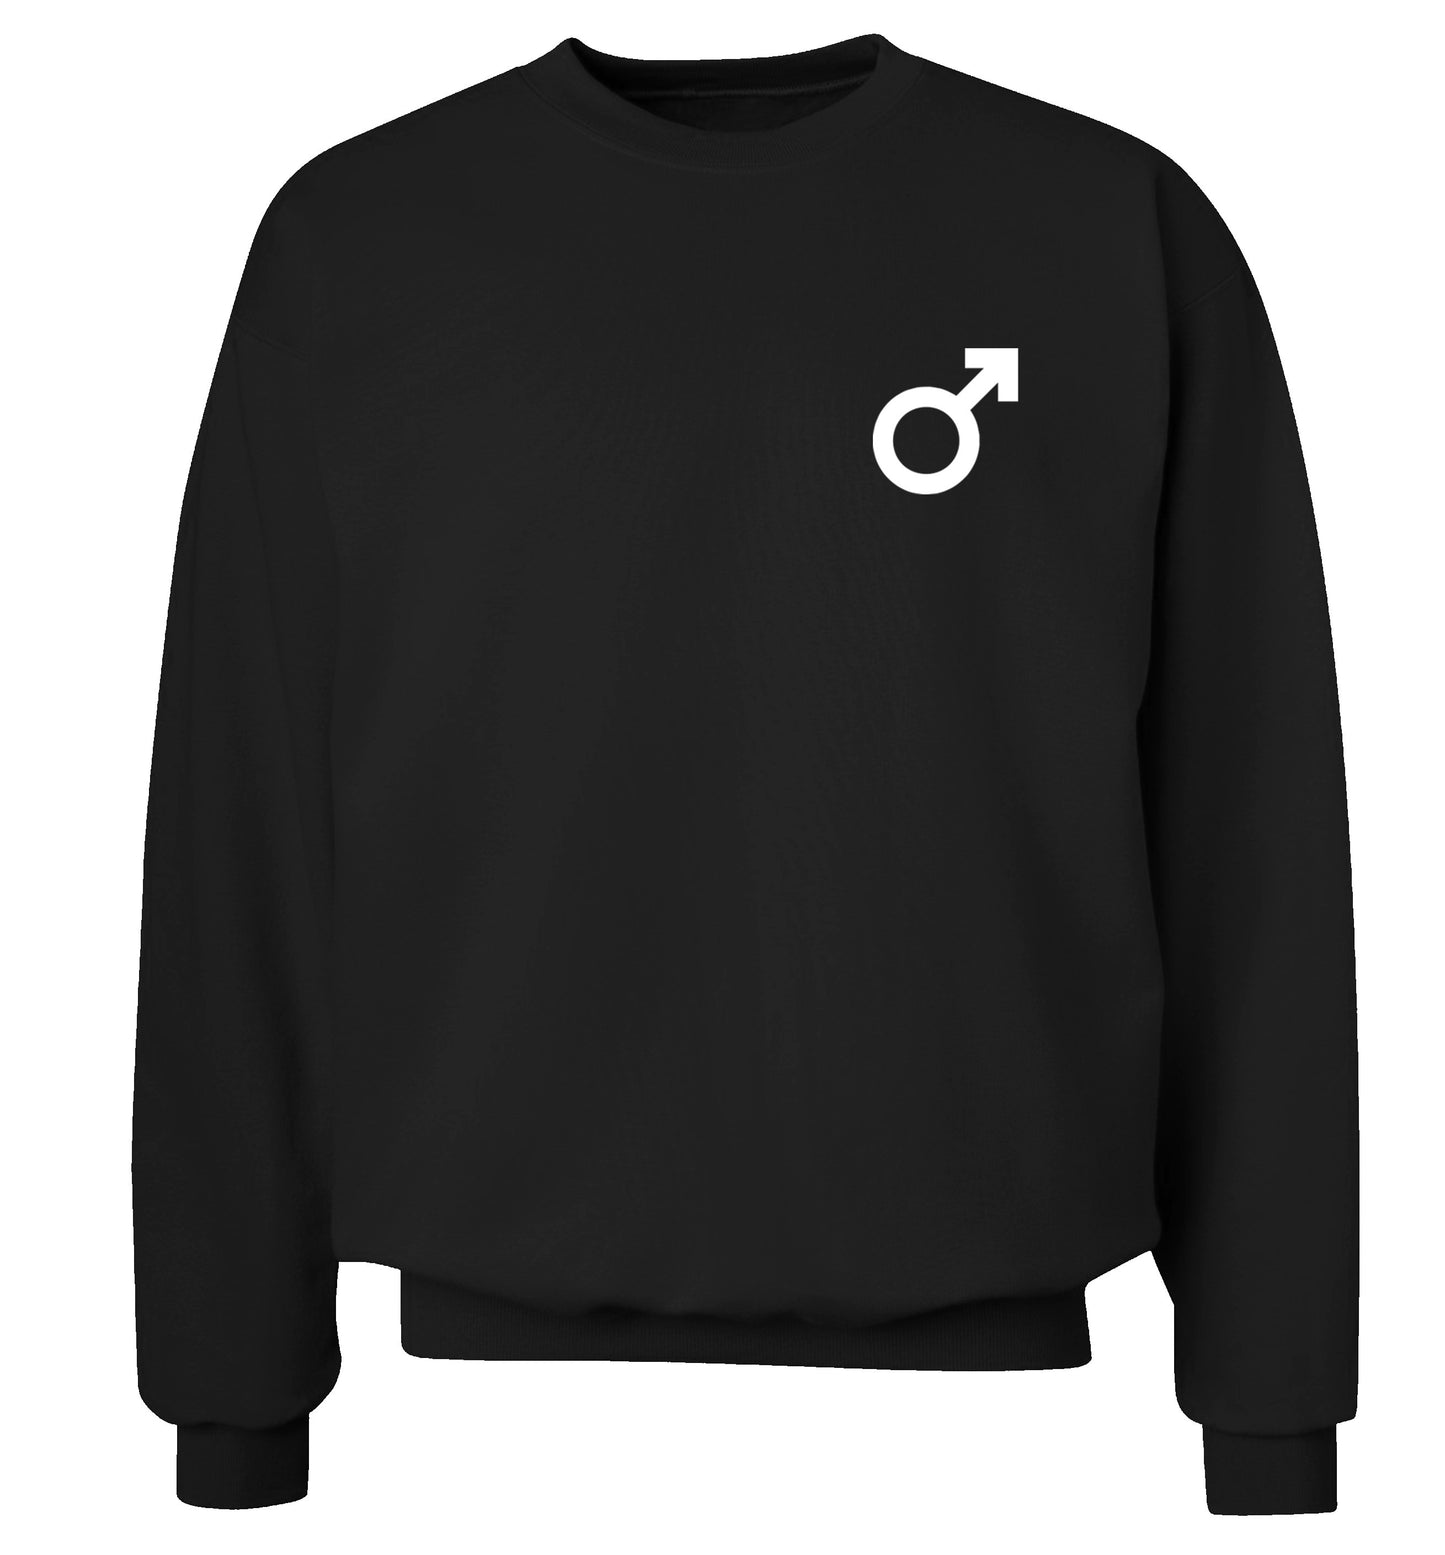 Male symbol pocket Adult's unisex black Sweater 2XL